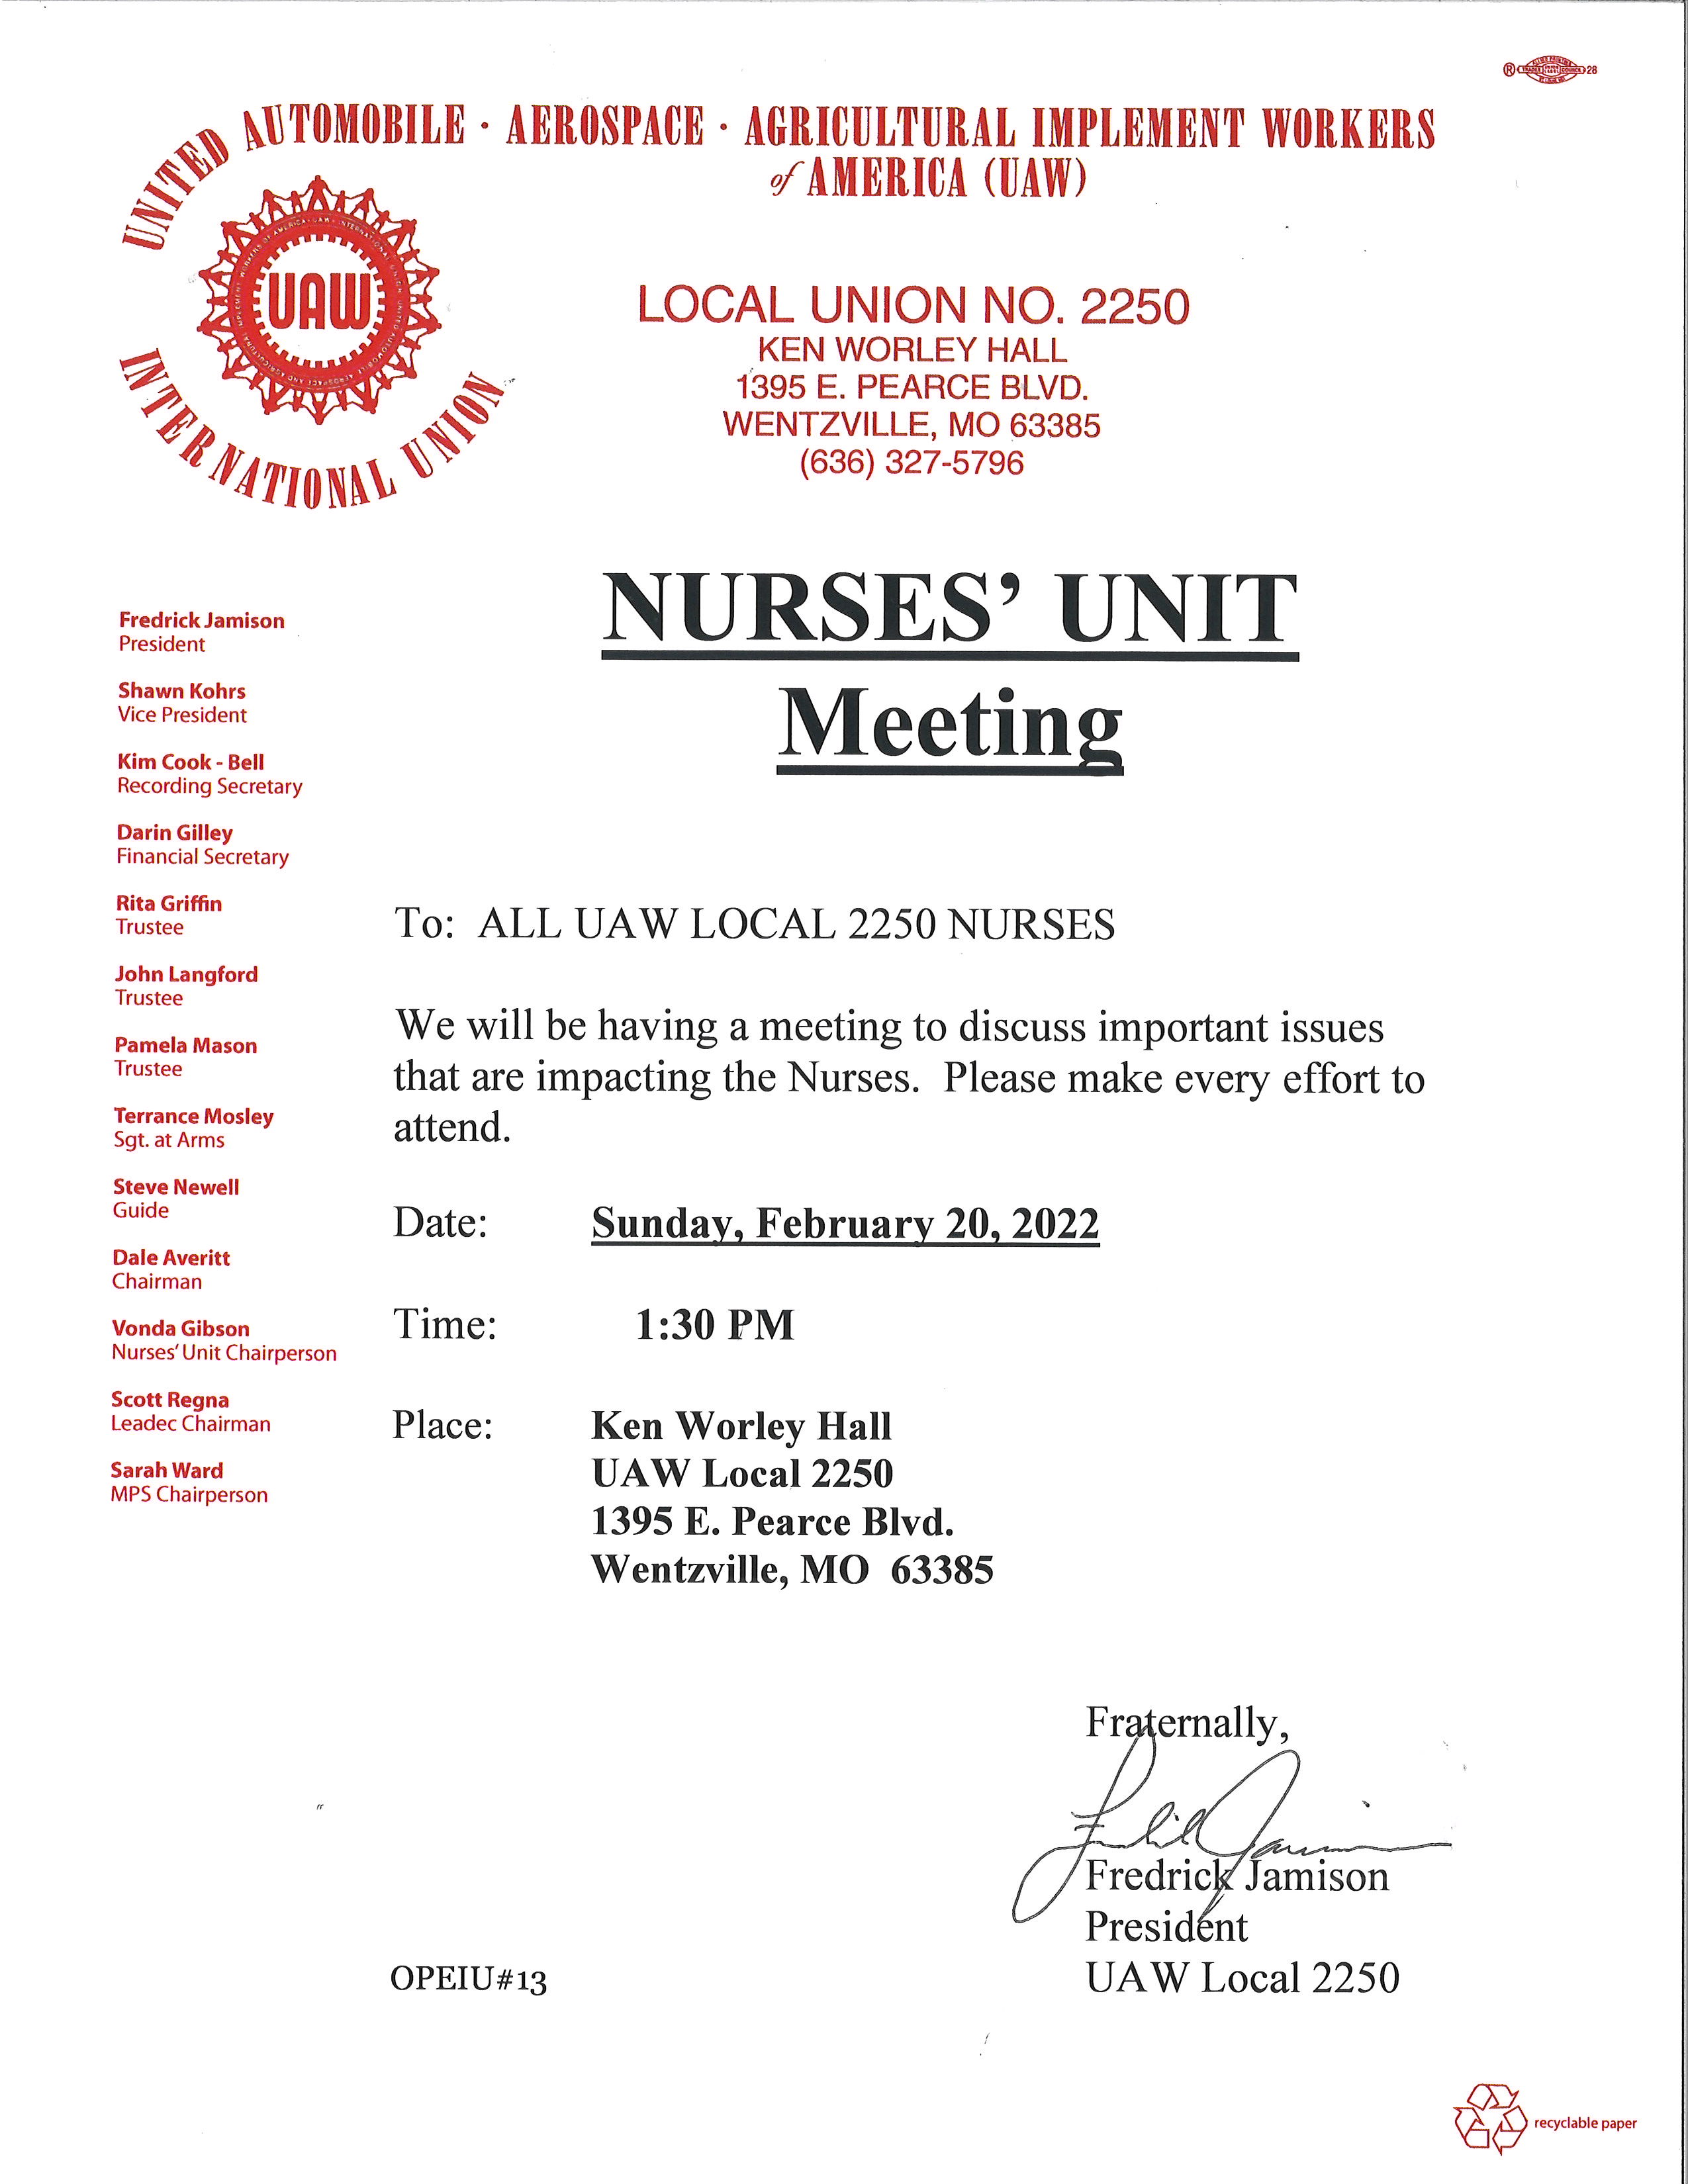 Notice: Nurses Meeting At The Hall